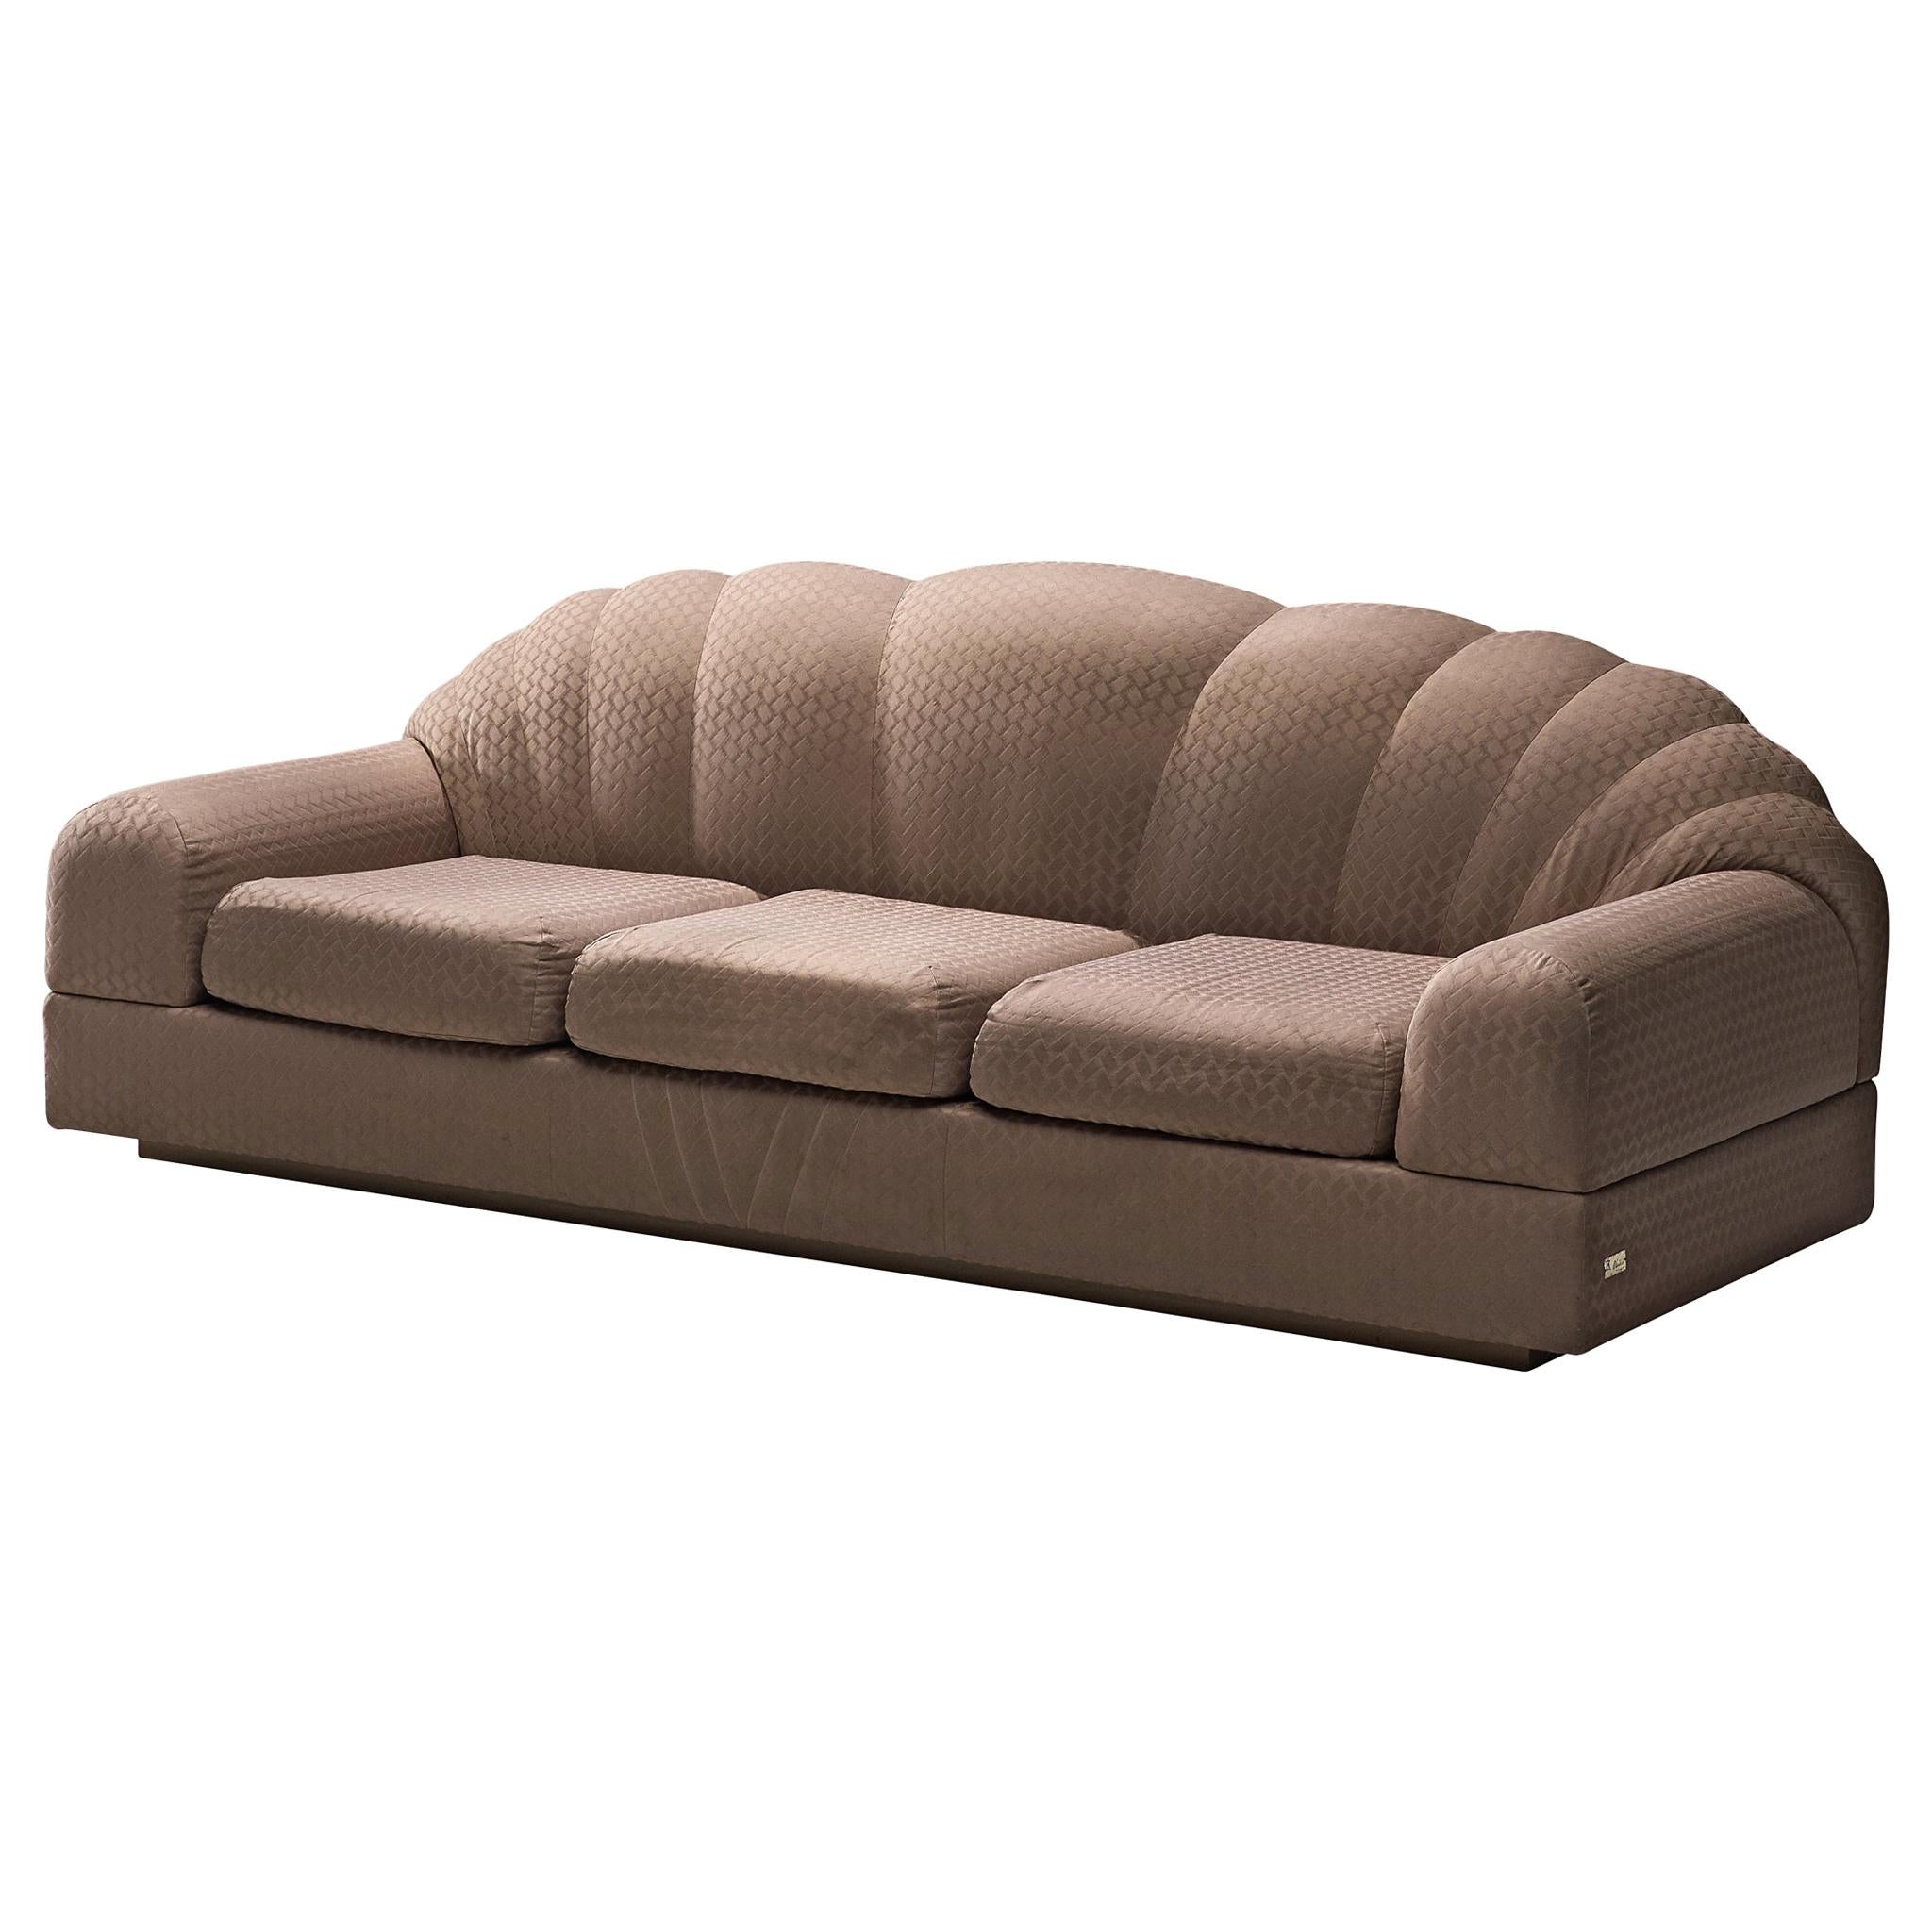 Alain Delon "Salon" Sofa in Taupe Upholstery